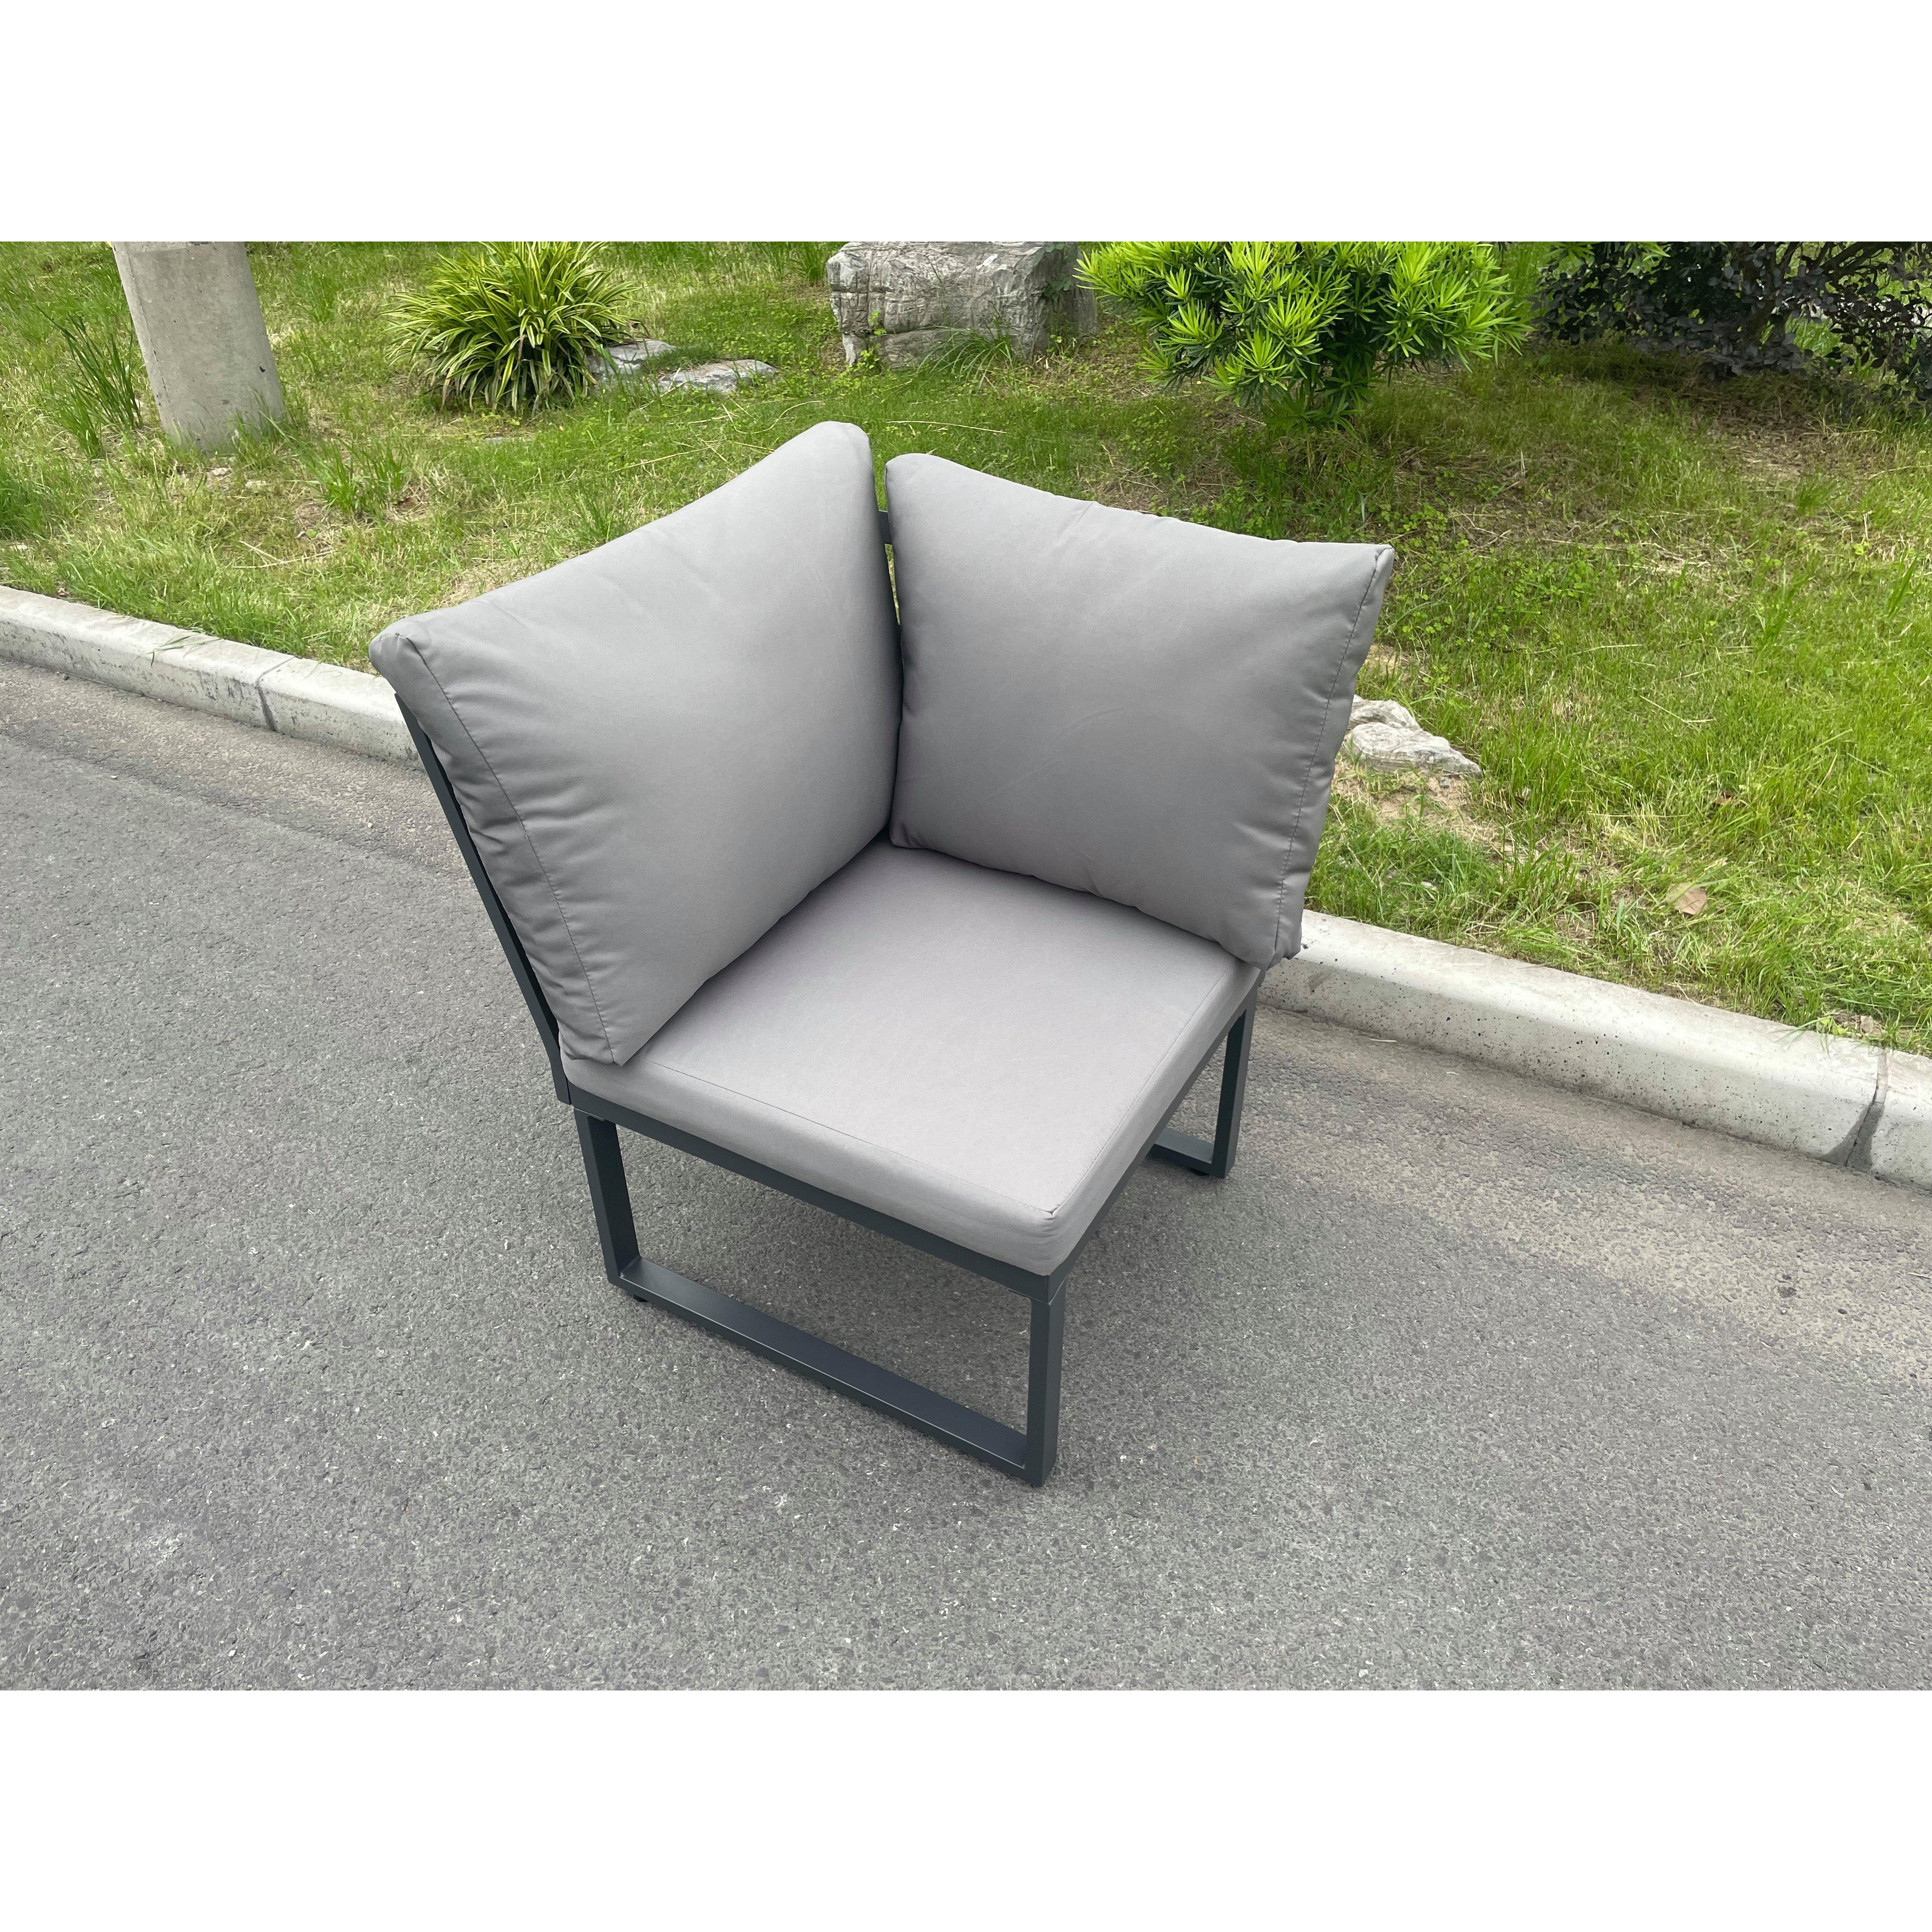 Aluminum Outdoor Garden Furniture Single Corner Sofa With Seat And Back Cushion Dark Grey - image 1